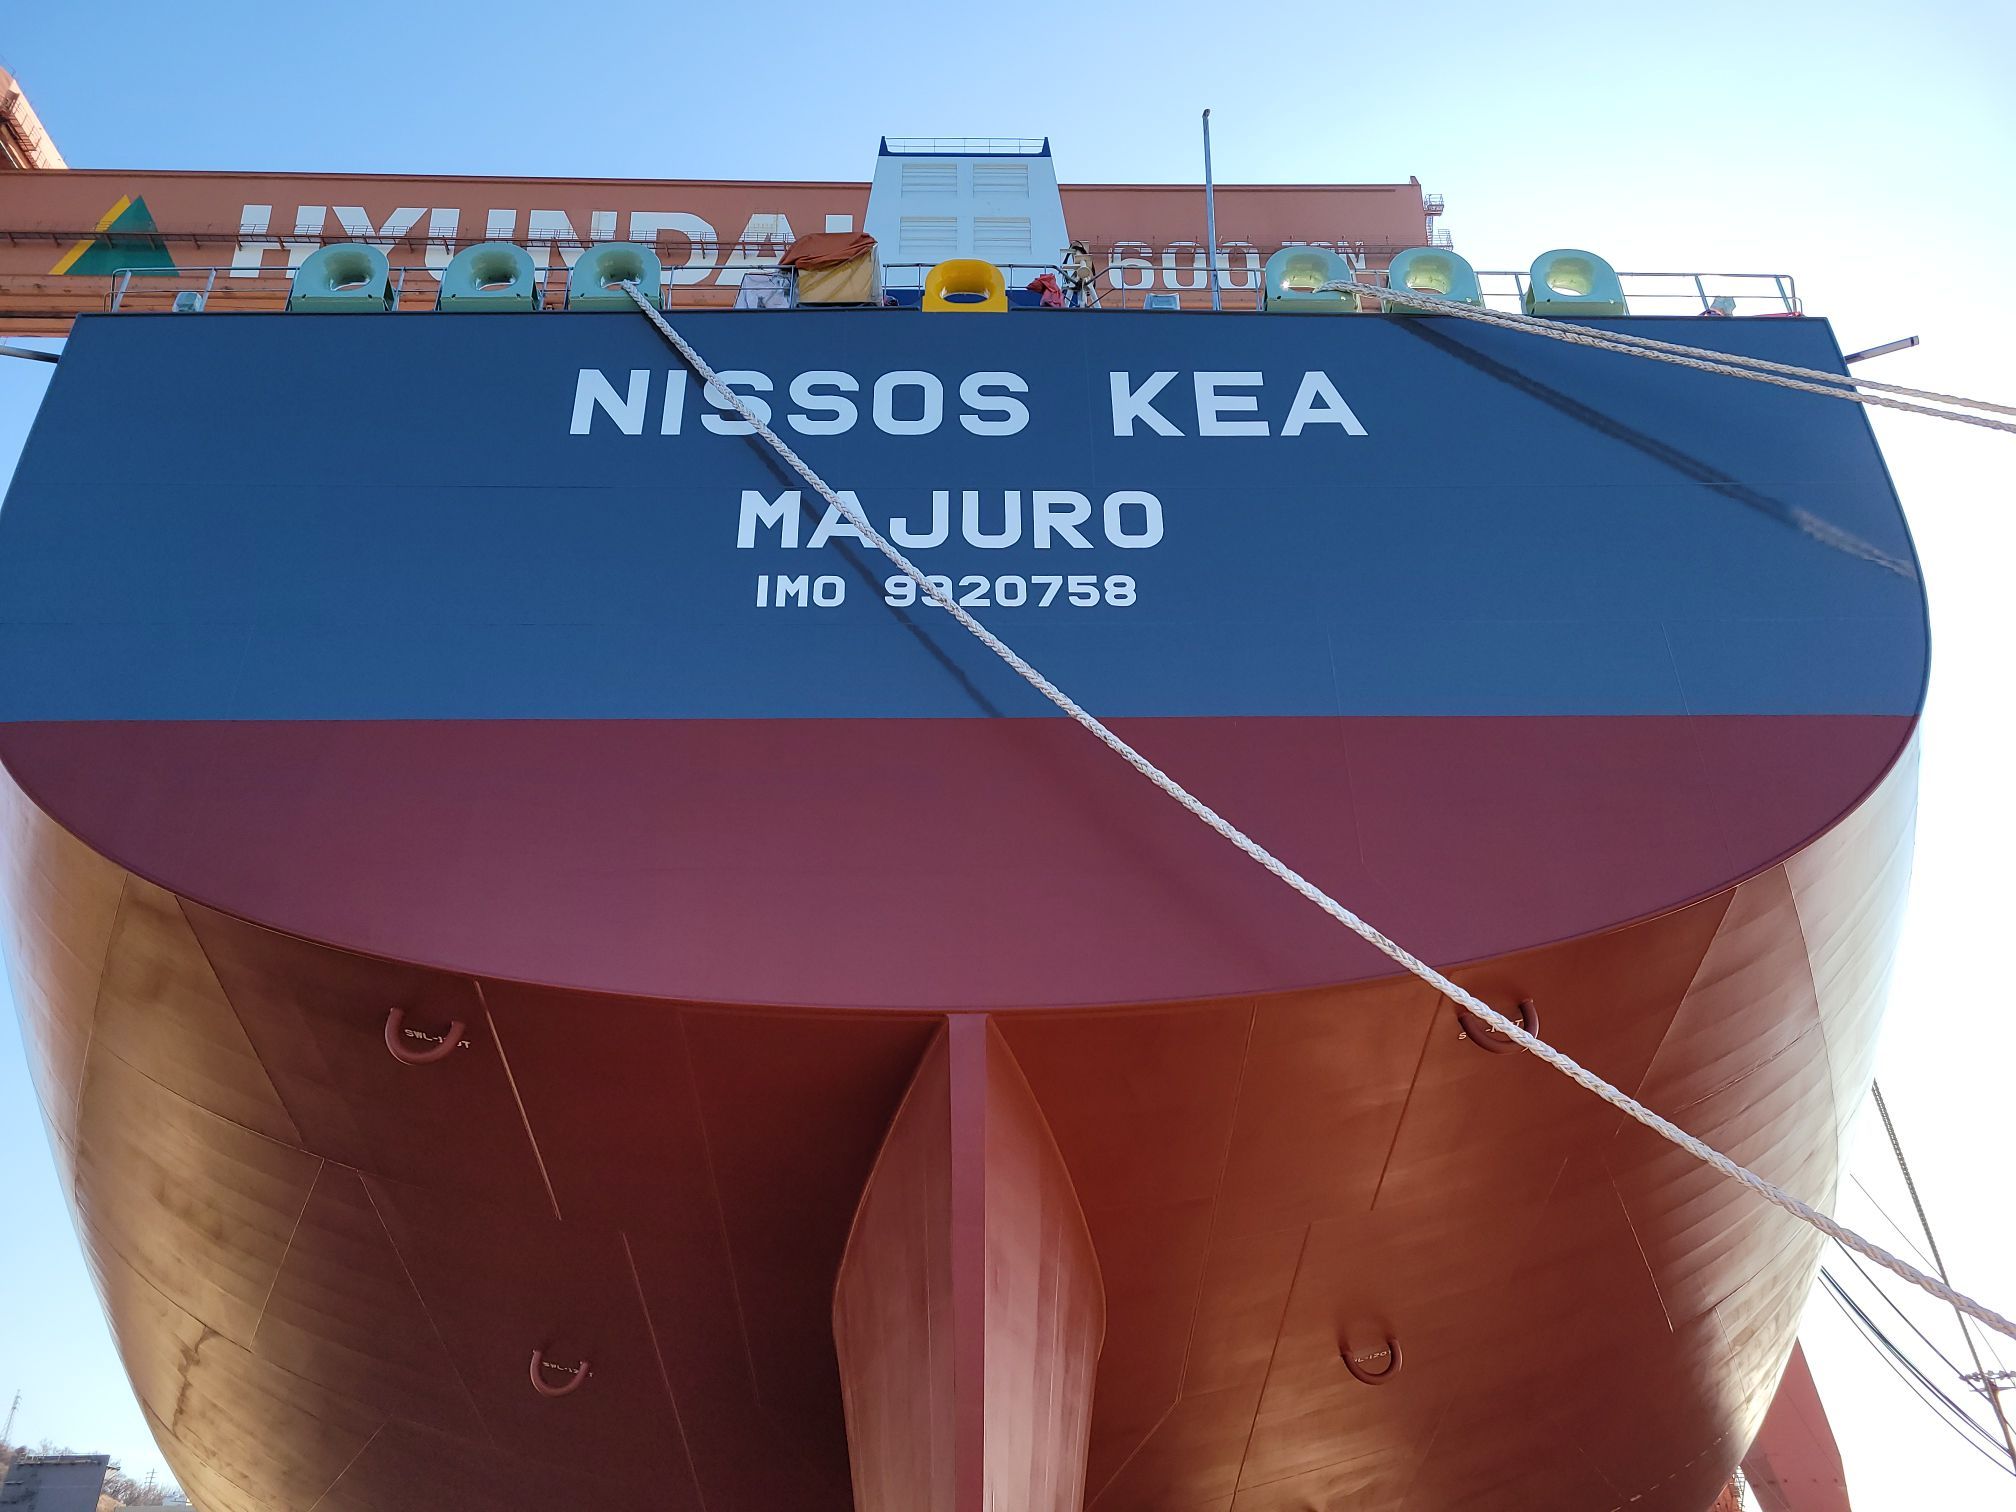 Delivery of VLCC Newbuilding NISSOS KEA